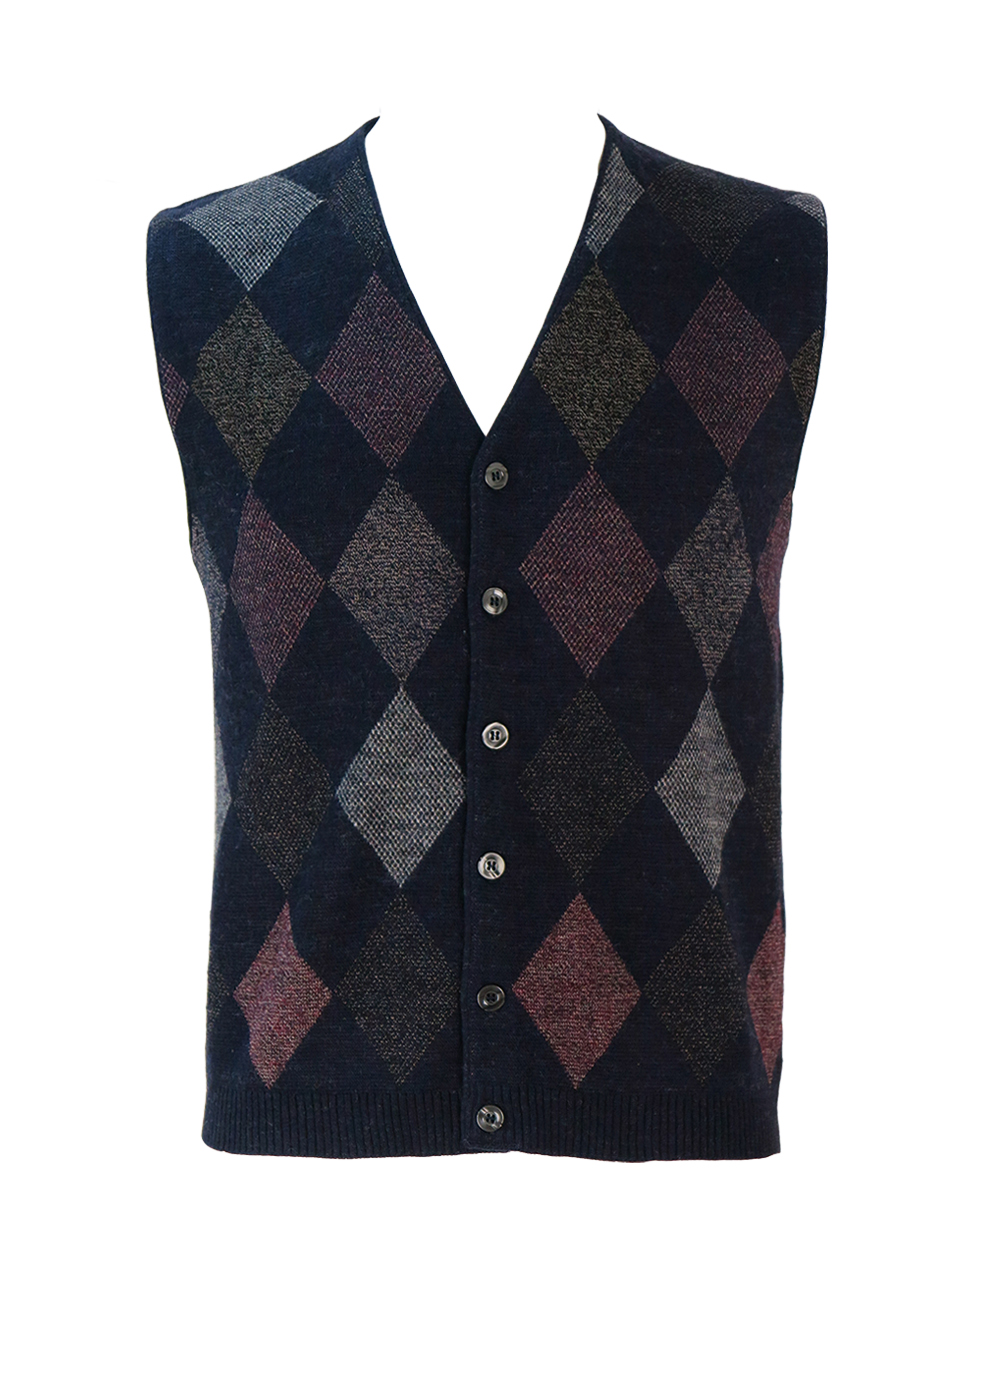 Navy Blue Marl Knit Waistcoat with Burgundy & Grey Argyle Pattern - M ...